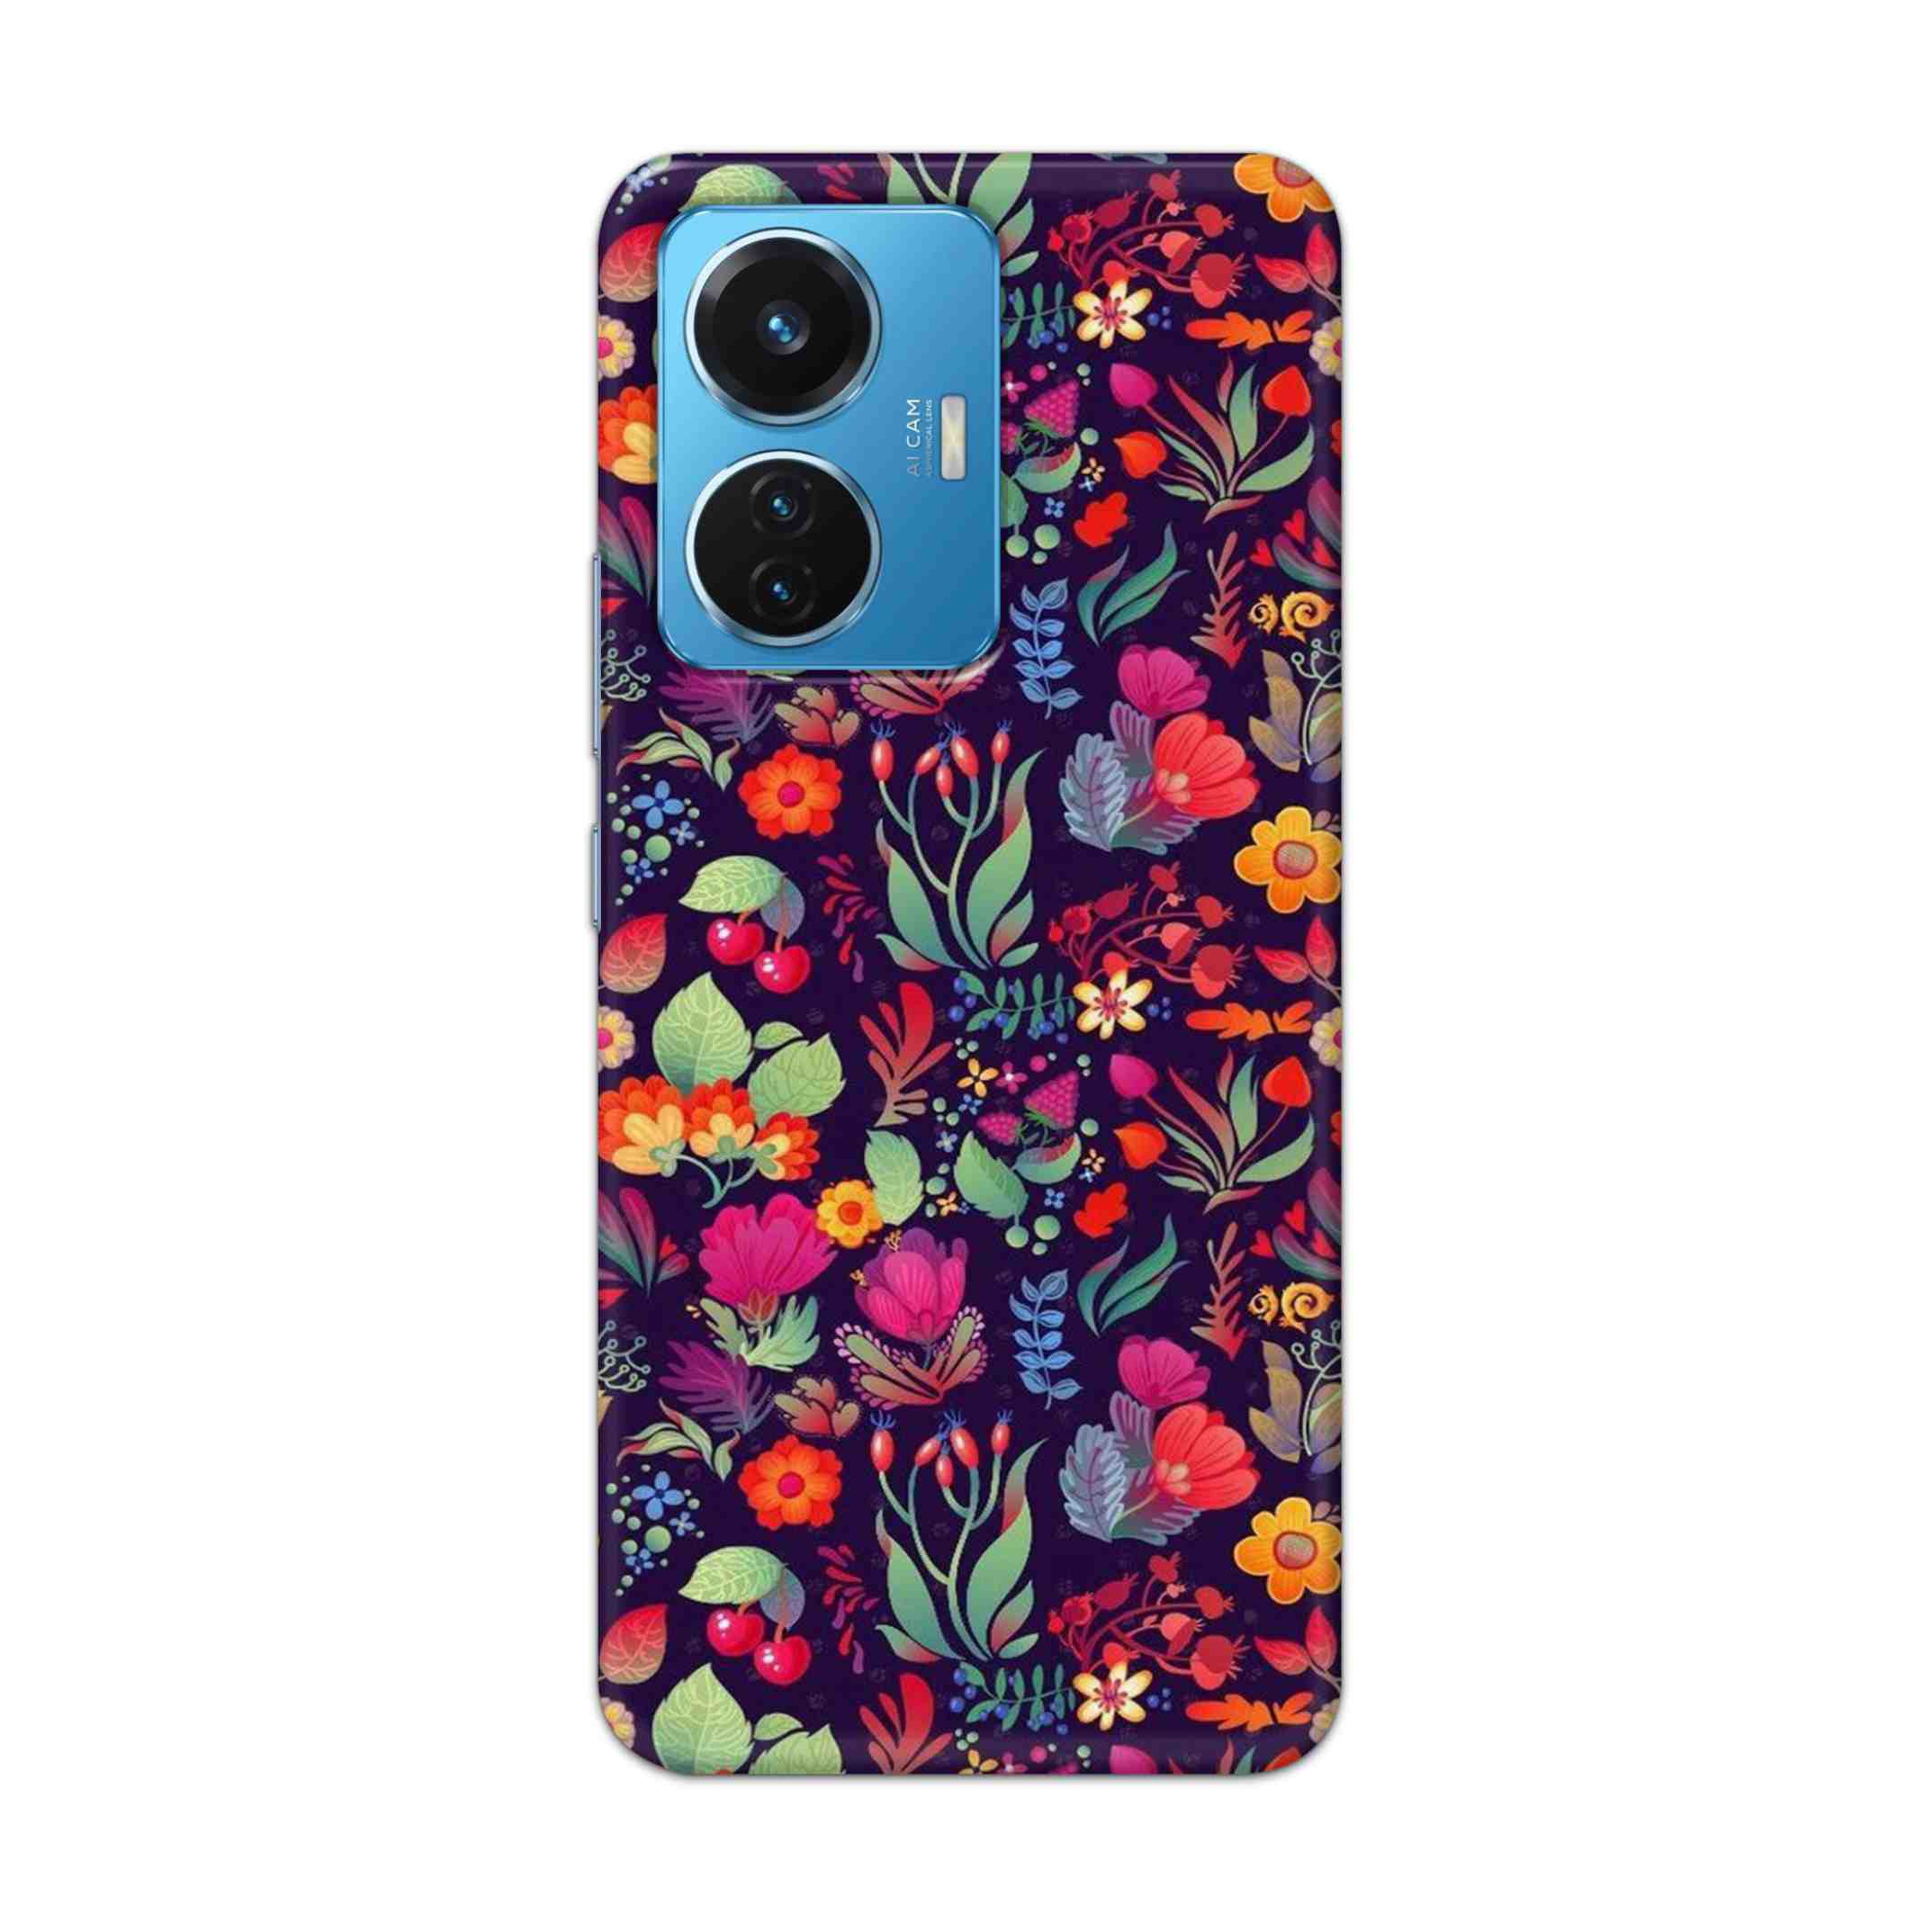 Buy Fruits Flower Hard Back Mobile Phone Case Cover For Vivo T1 44W Online